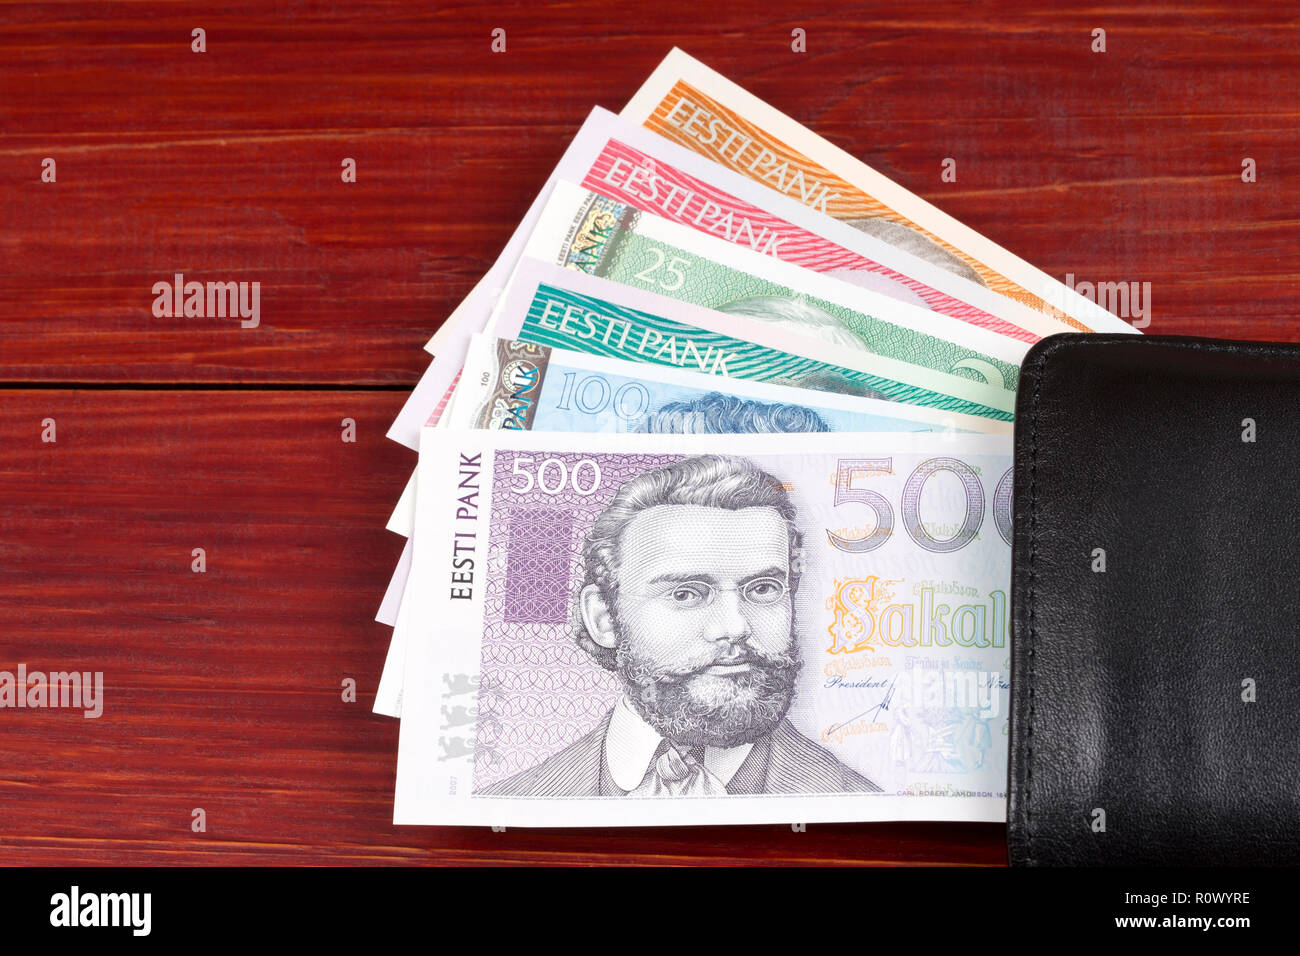 Estonian money in the black wallet Stock Photo